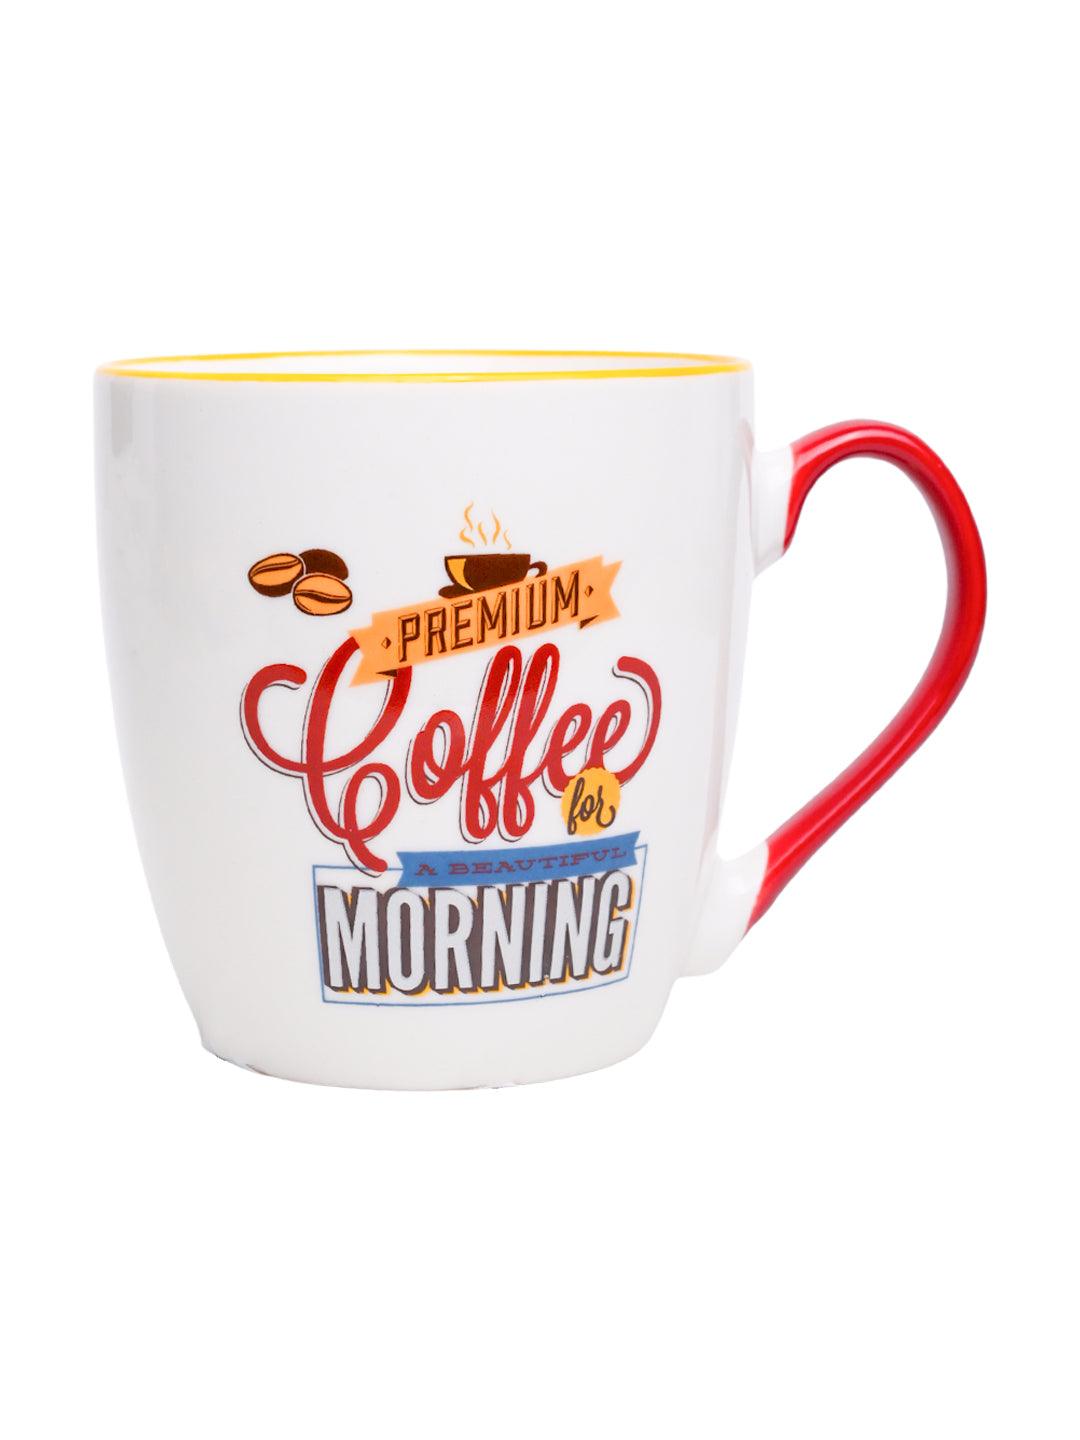 PREMIUM Coffee for MORNING - 400mL - MARKET 99